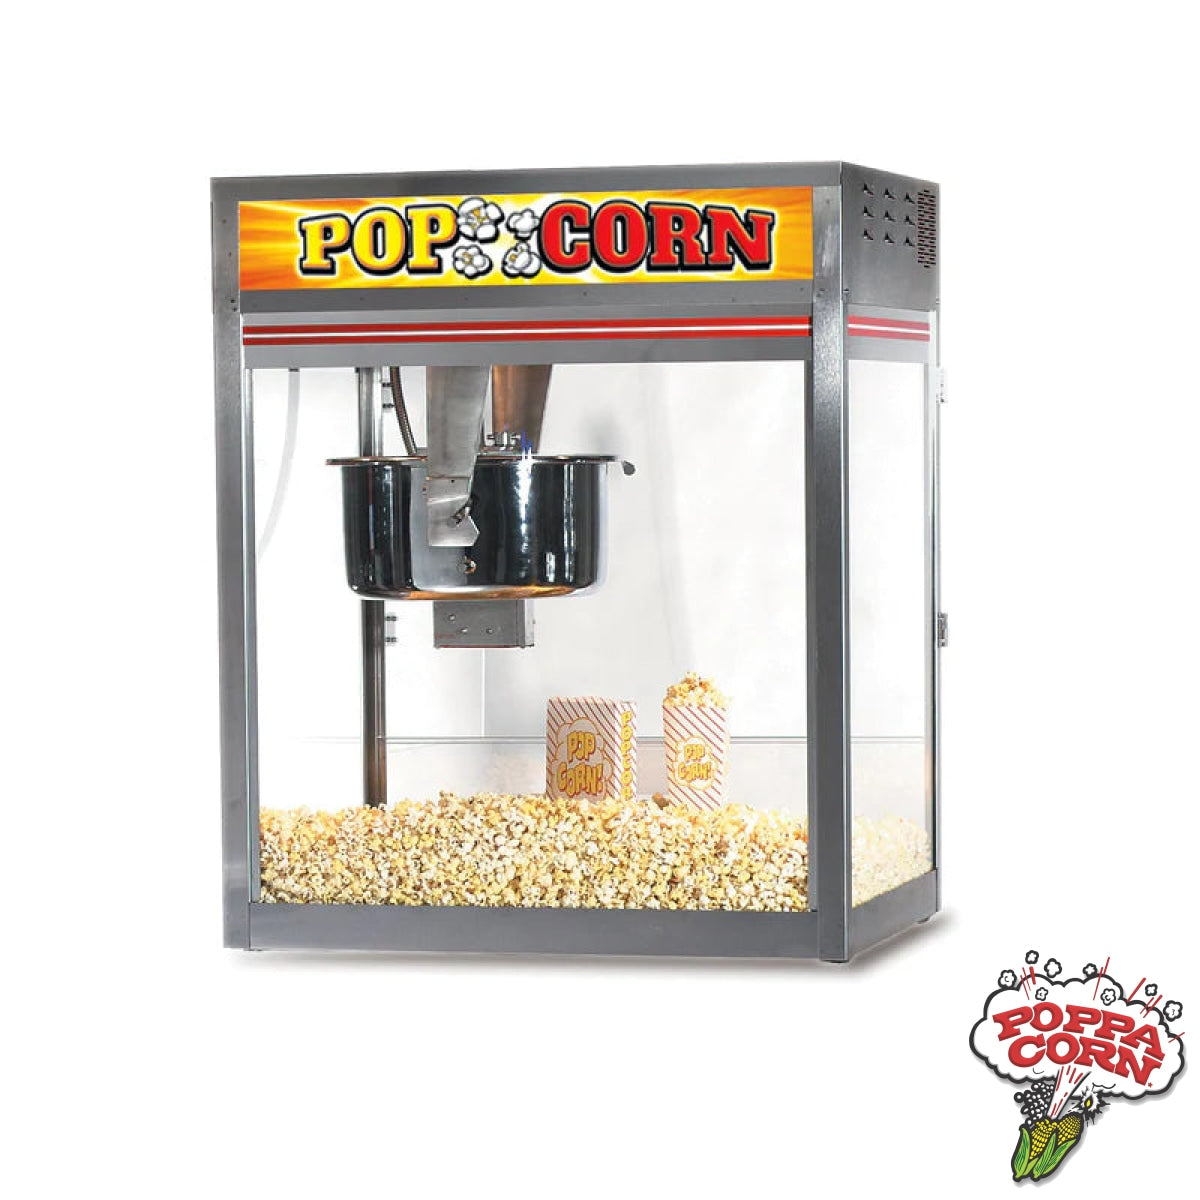 Discovery 32-oz. Popcorn Machine - GM2557 - Poppa Corn Corp